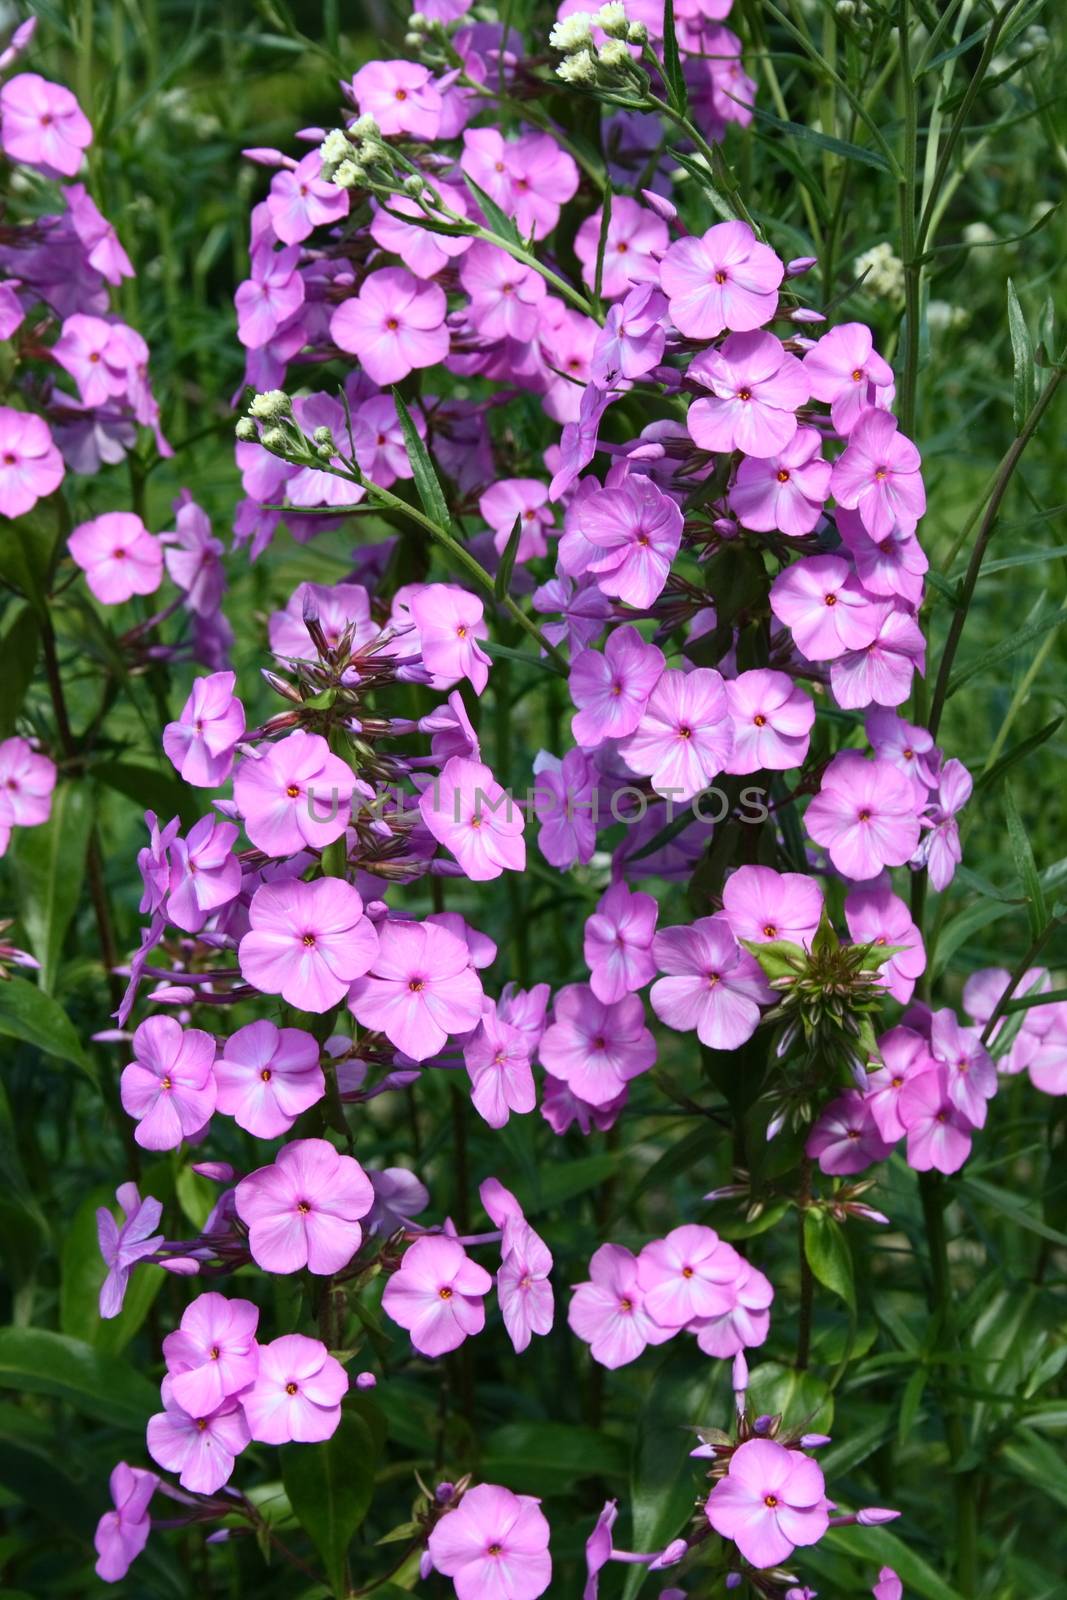 A pink flowering Phlox (Phlox) 